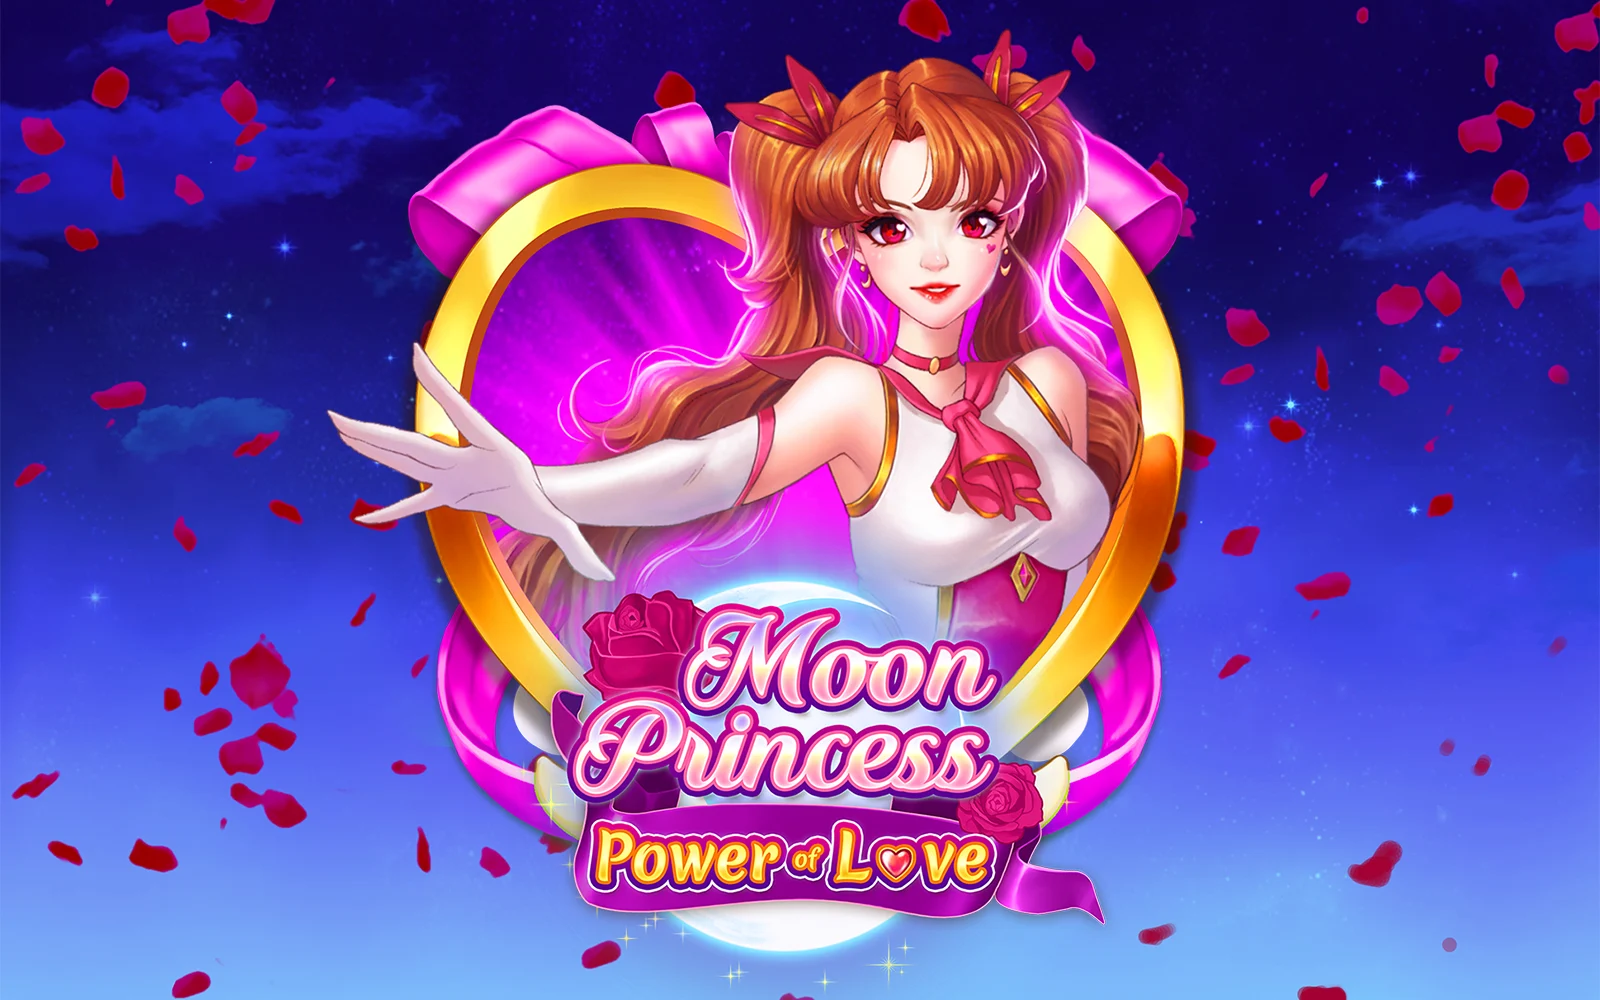 Gioca a Moon Princess Power of Love sul casino online Starcasino.be